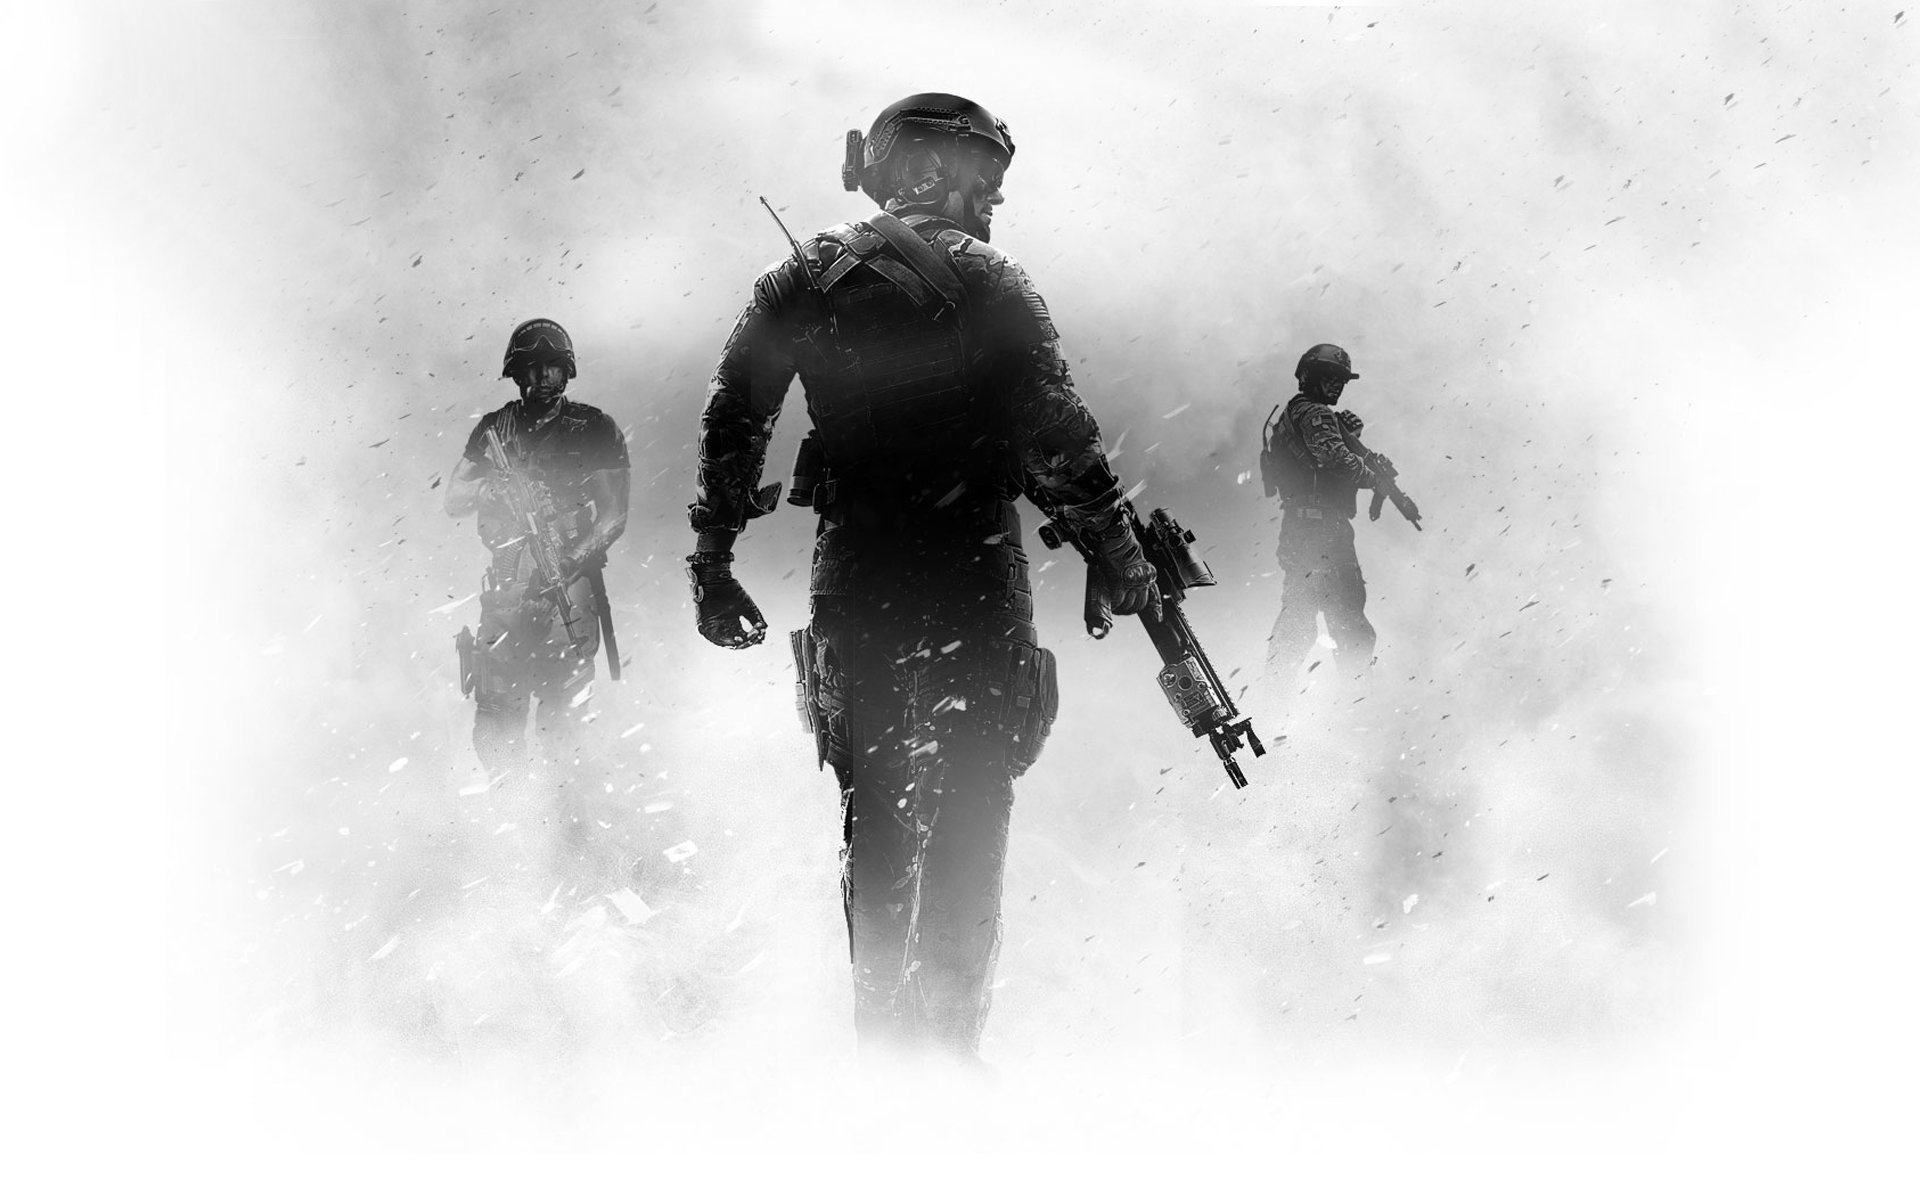 Best Call Of Duty: Modern Warfare 3 (MW3) wallpaper ID:378475 for High Resolution hd 1920x1200 computer